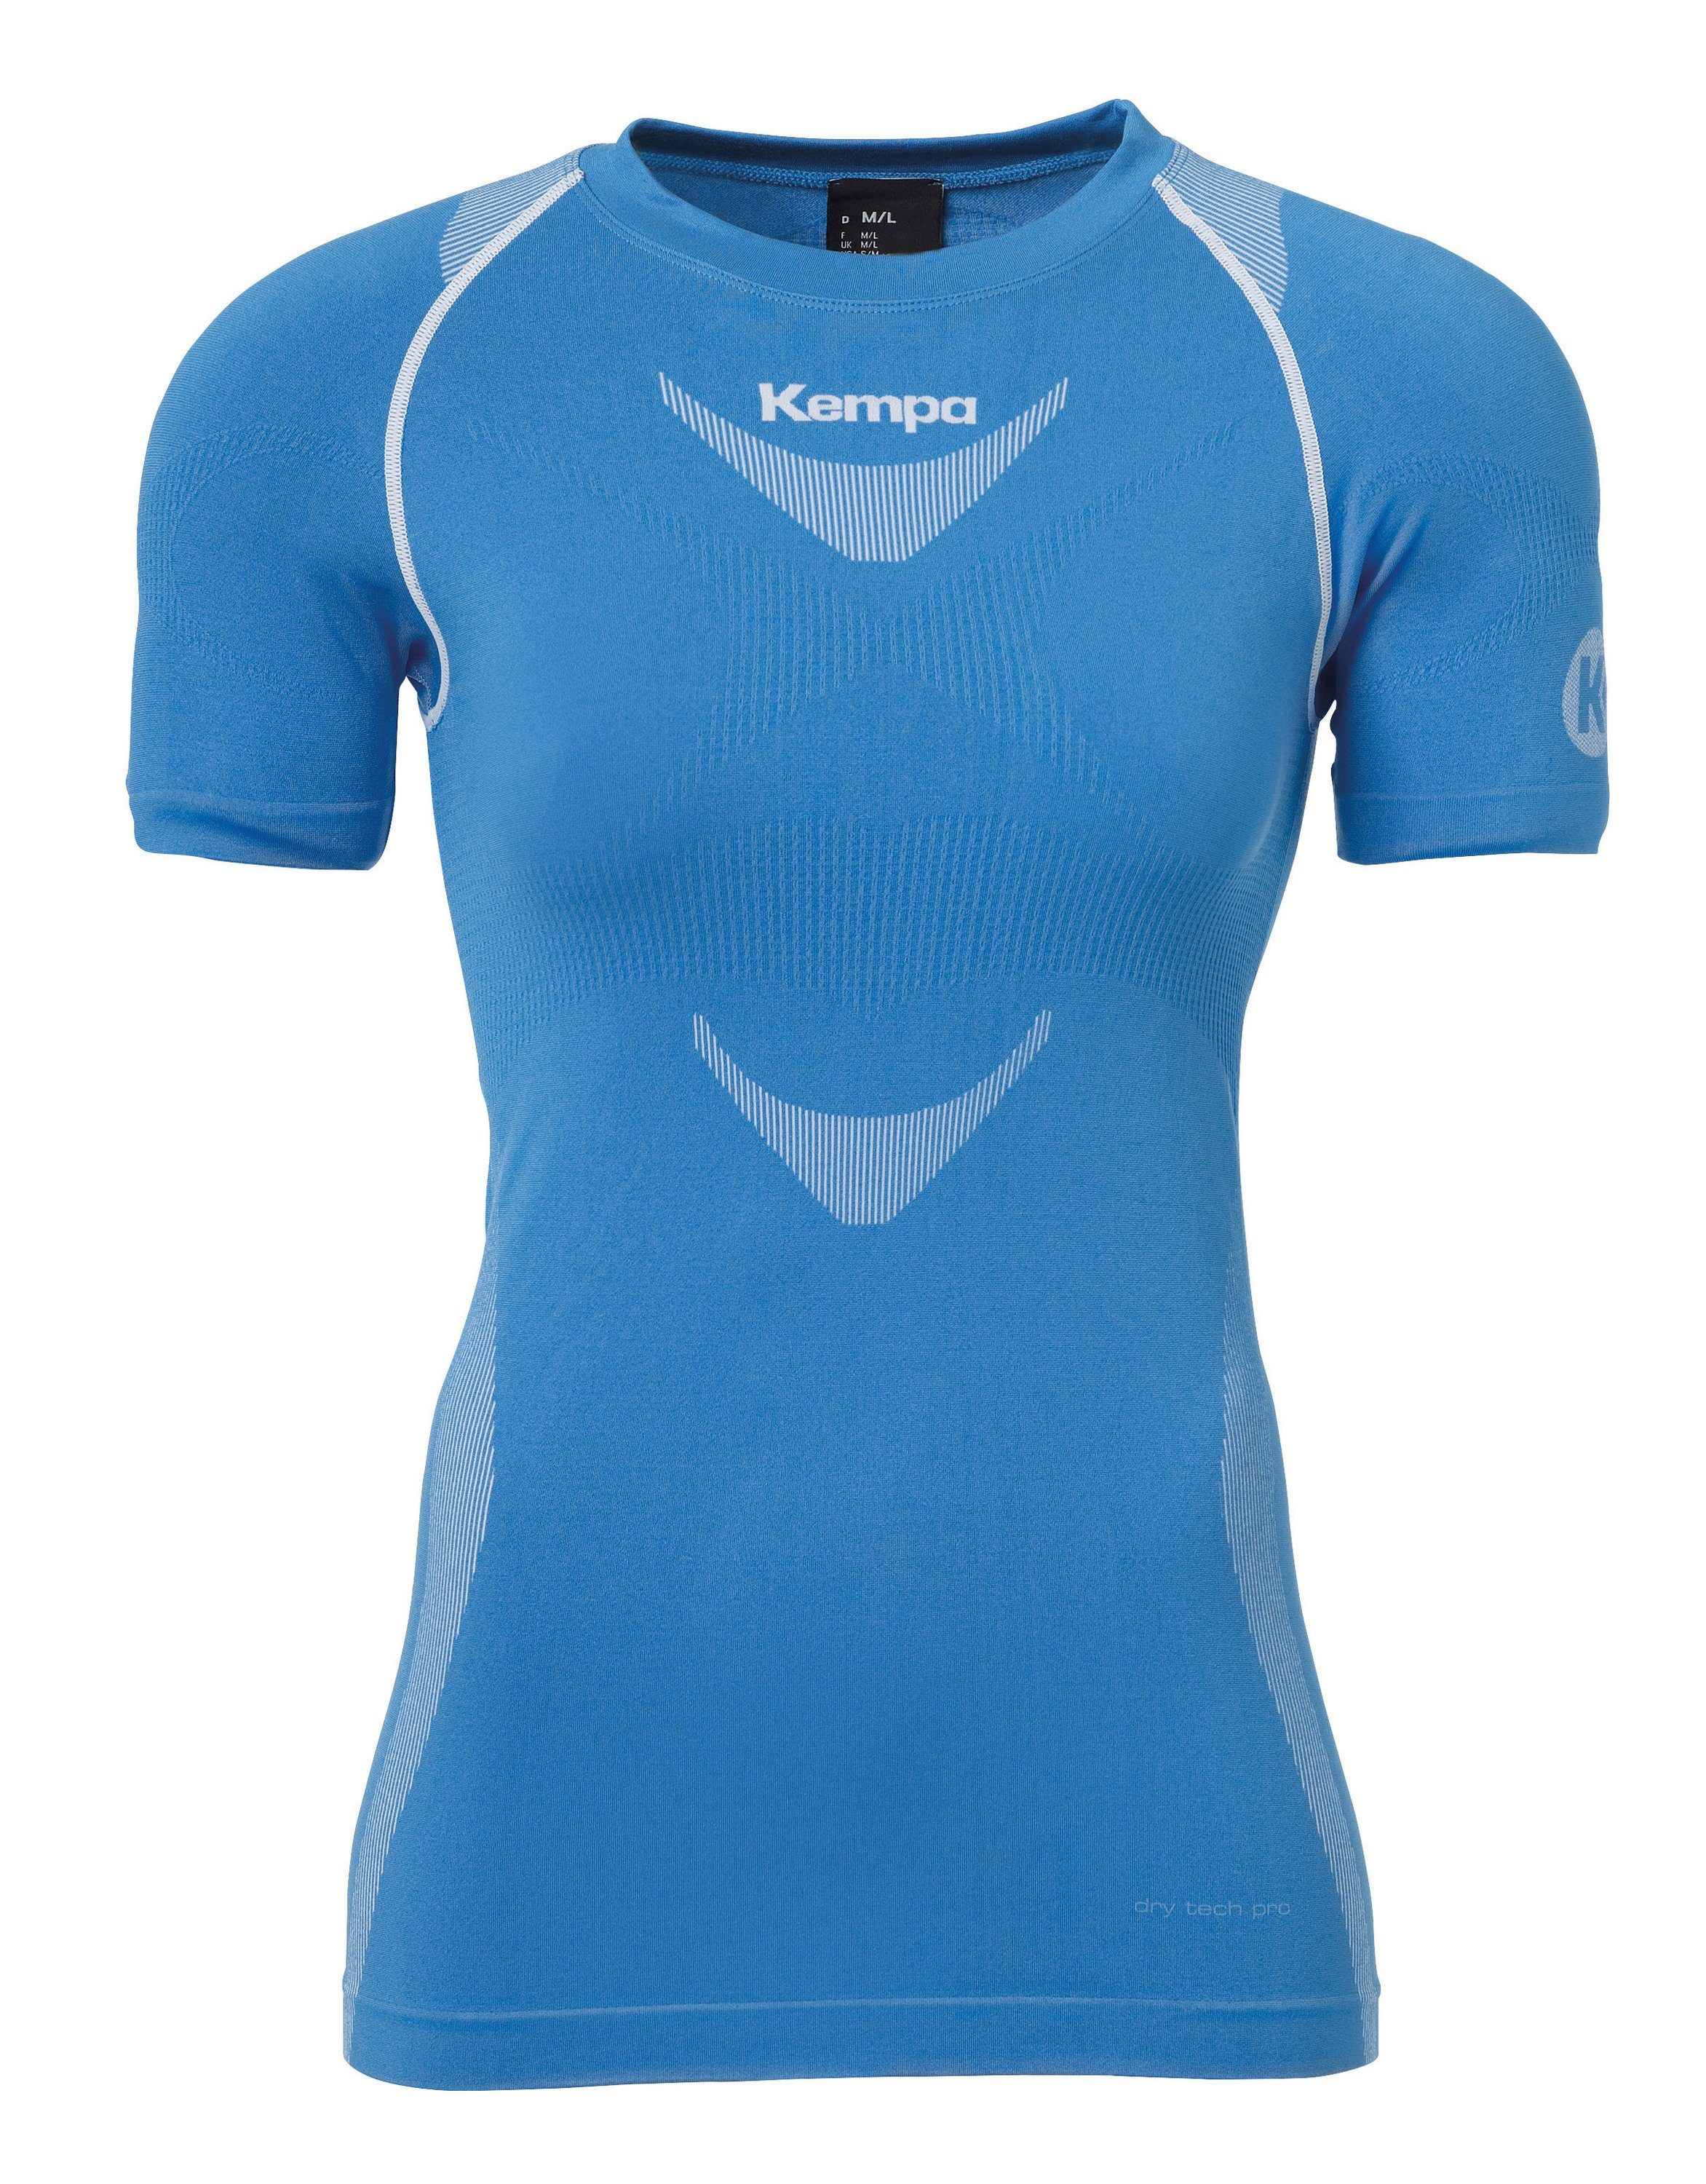 ATTITUDE Trainingsshirt WOMEN Kempa PRO schnelltrocknend atmungsaktiv, kempablau/weiß Shortsleeve Kempa